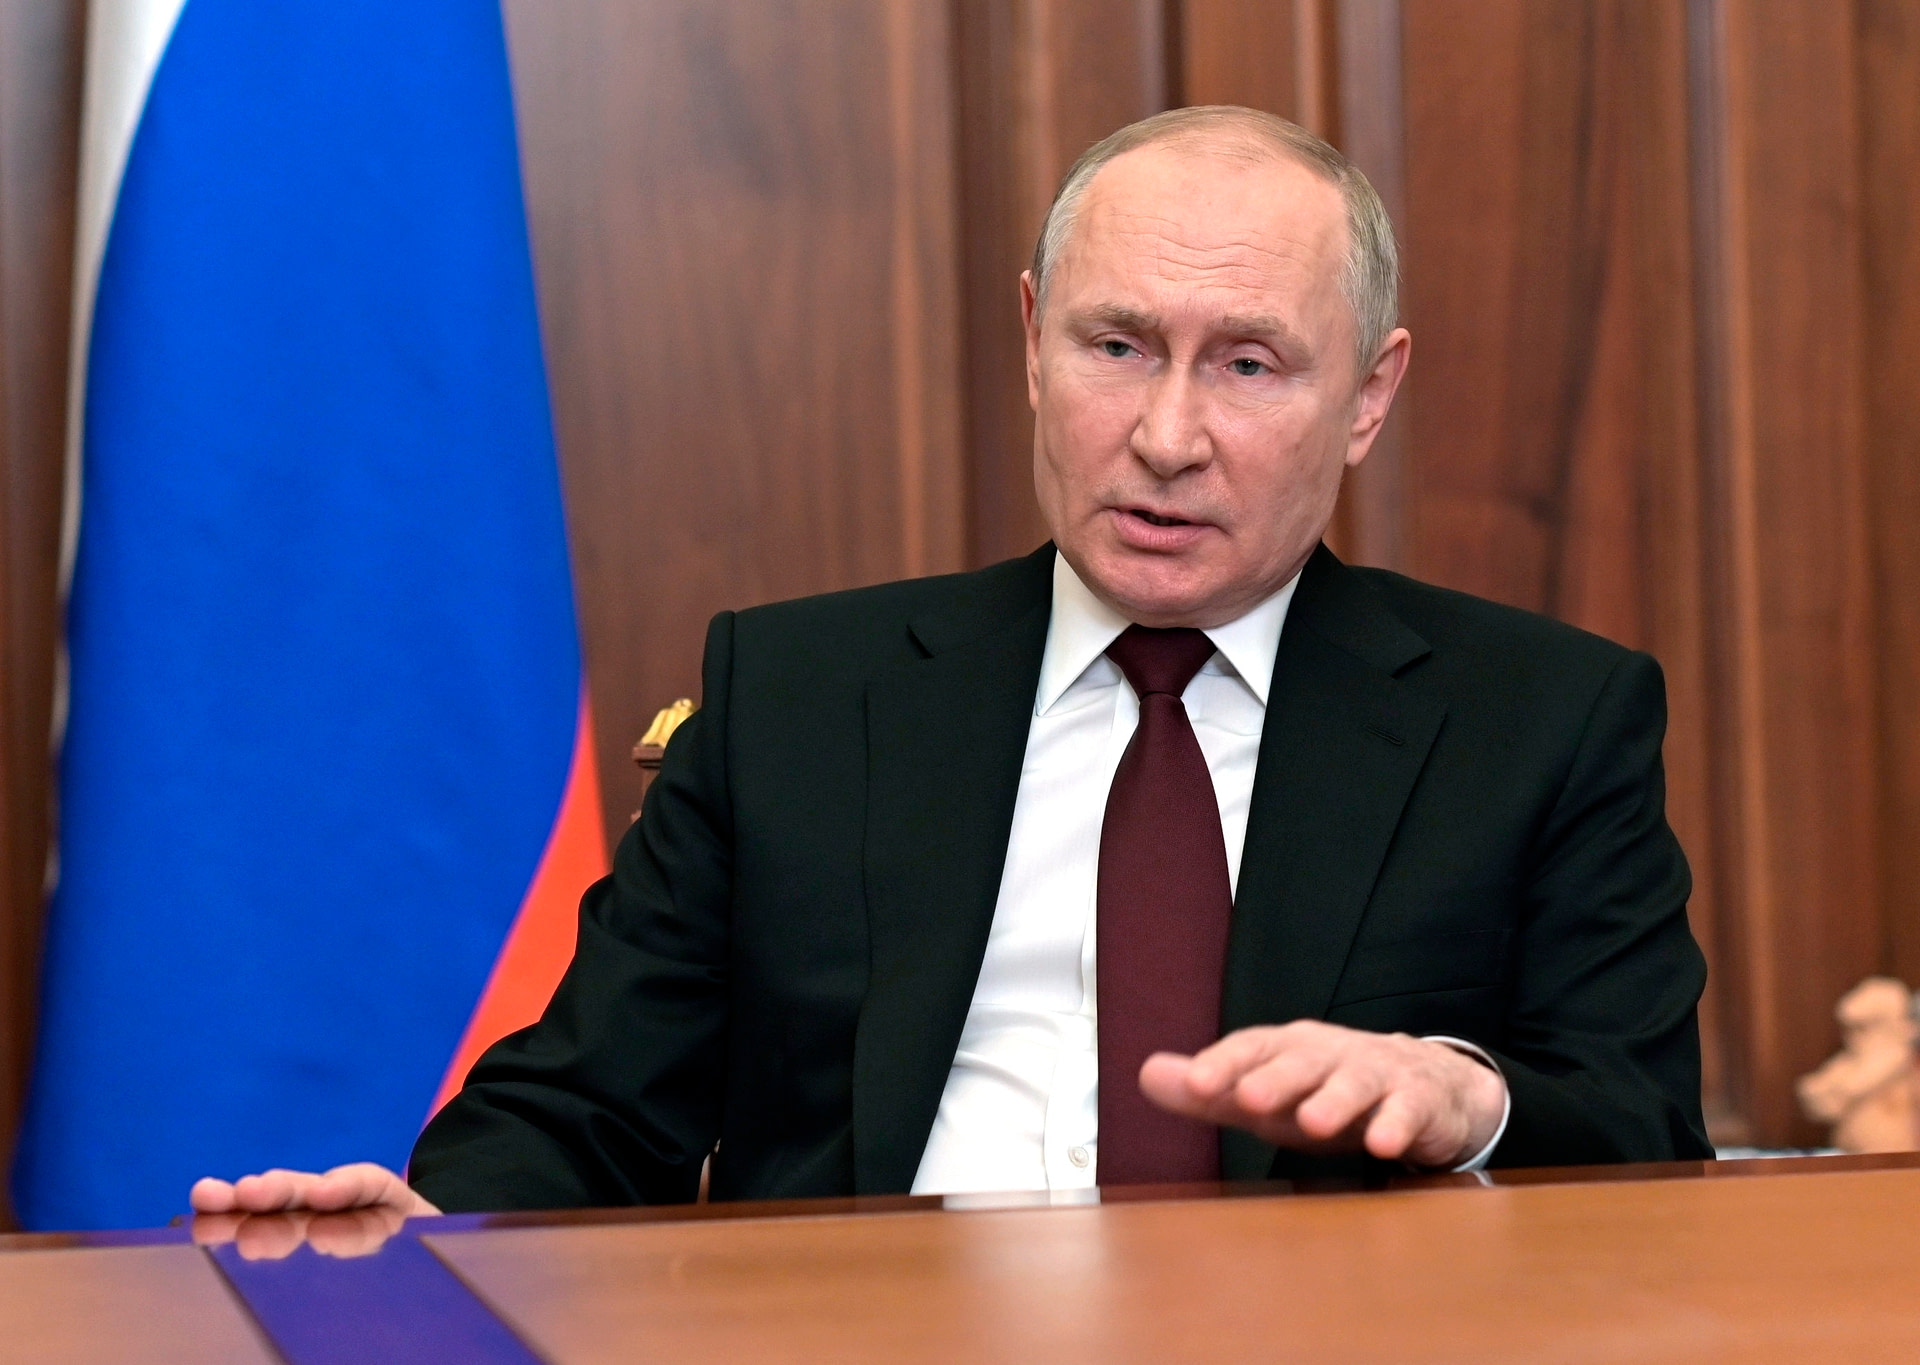 ICC issues arrest warrant for Vladimir Putin over Ukraine war